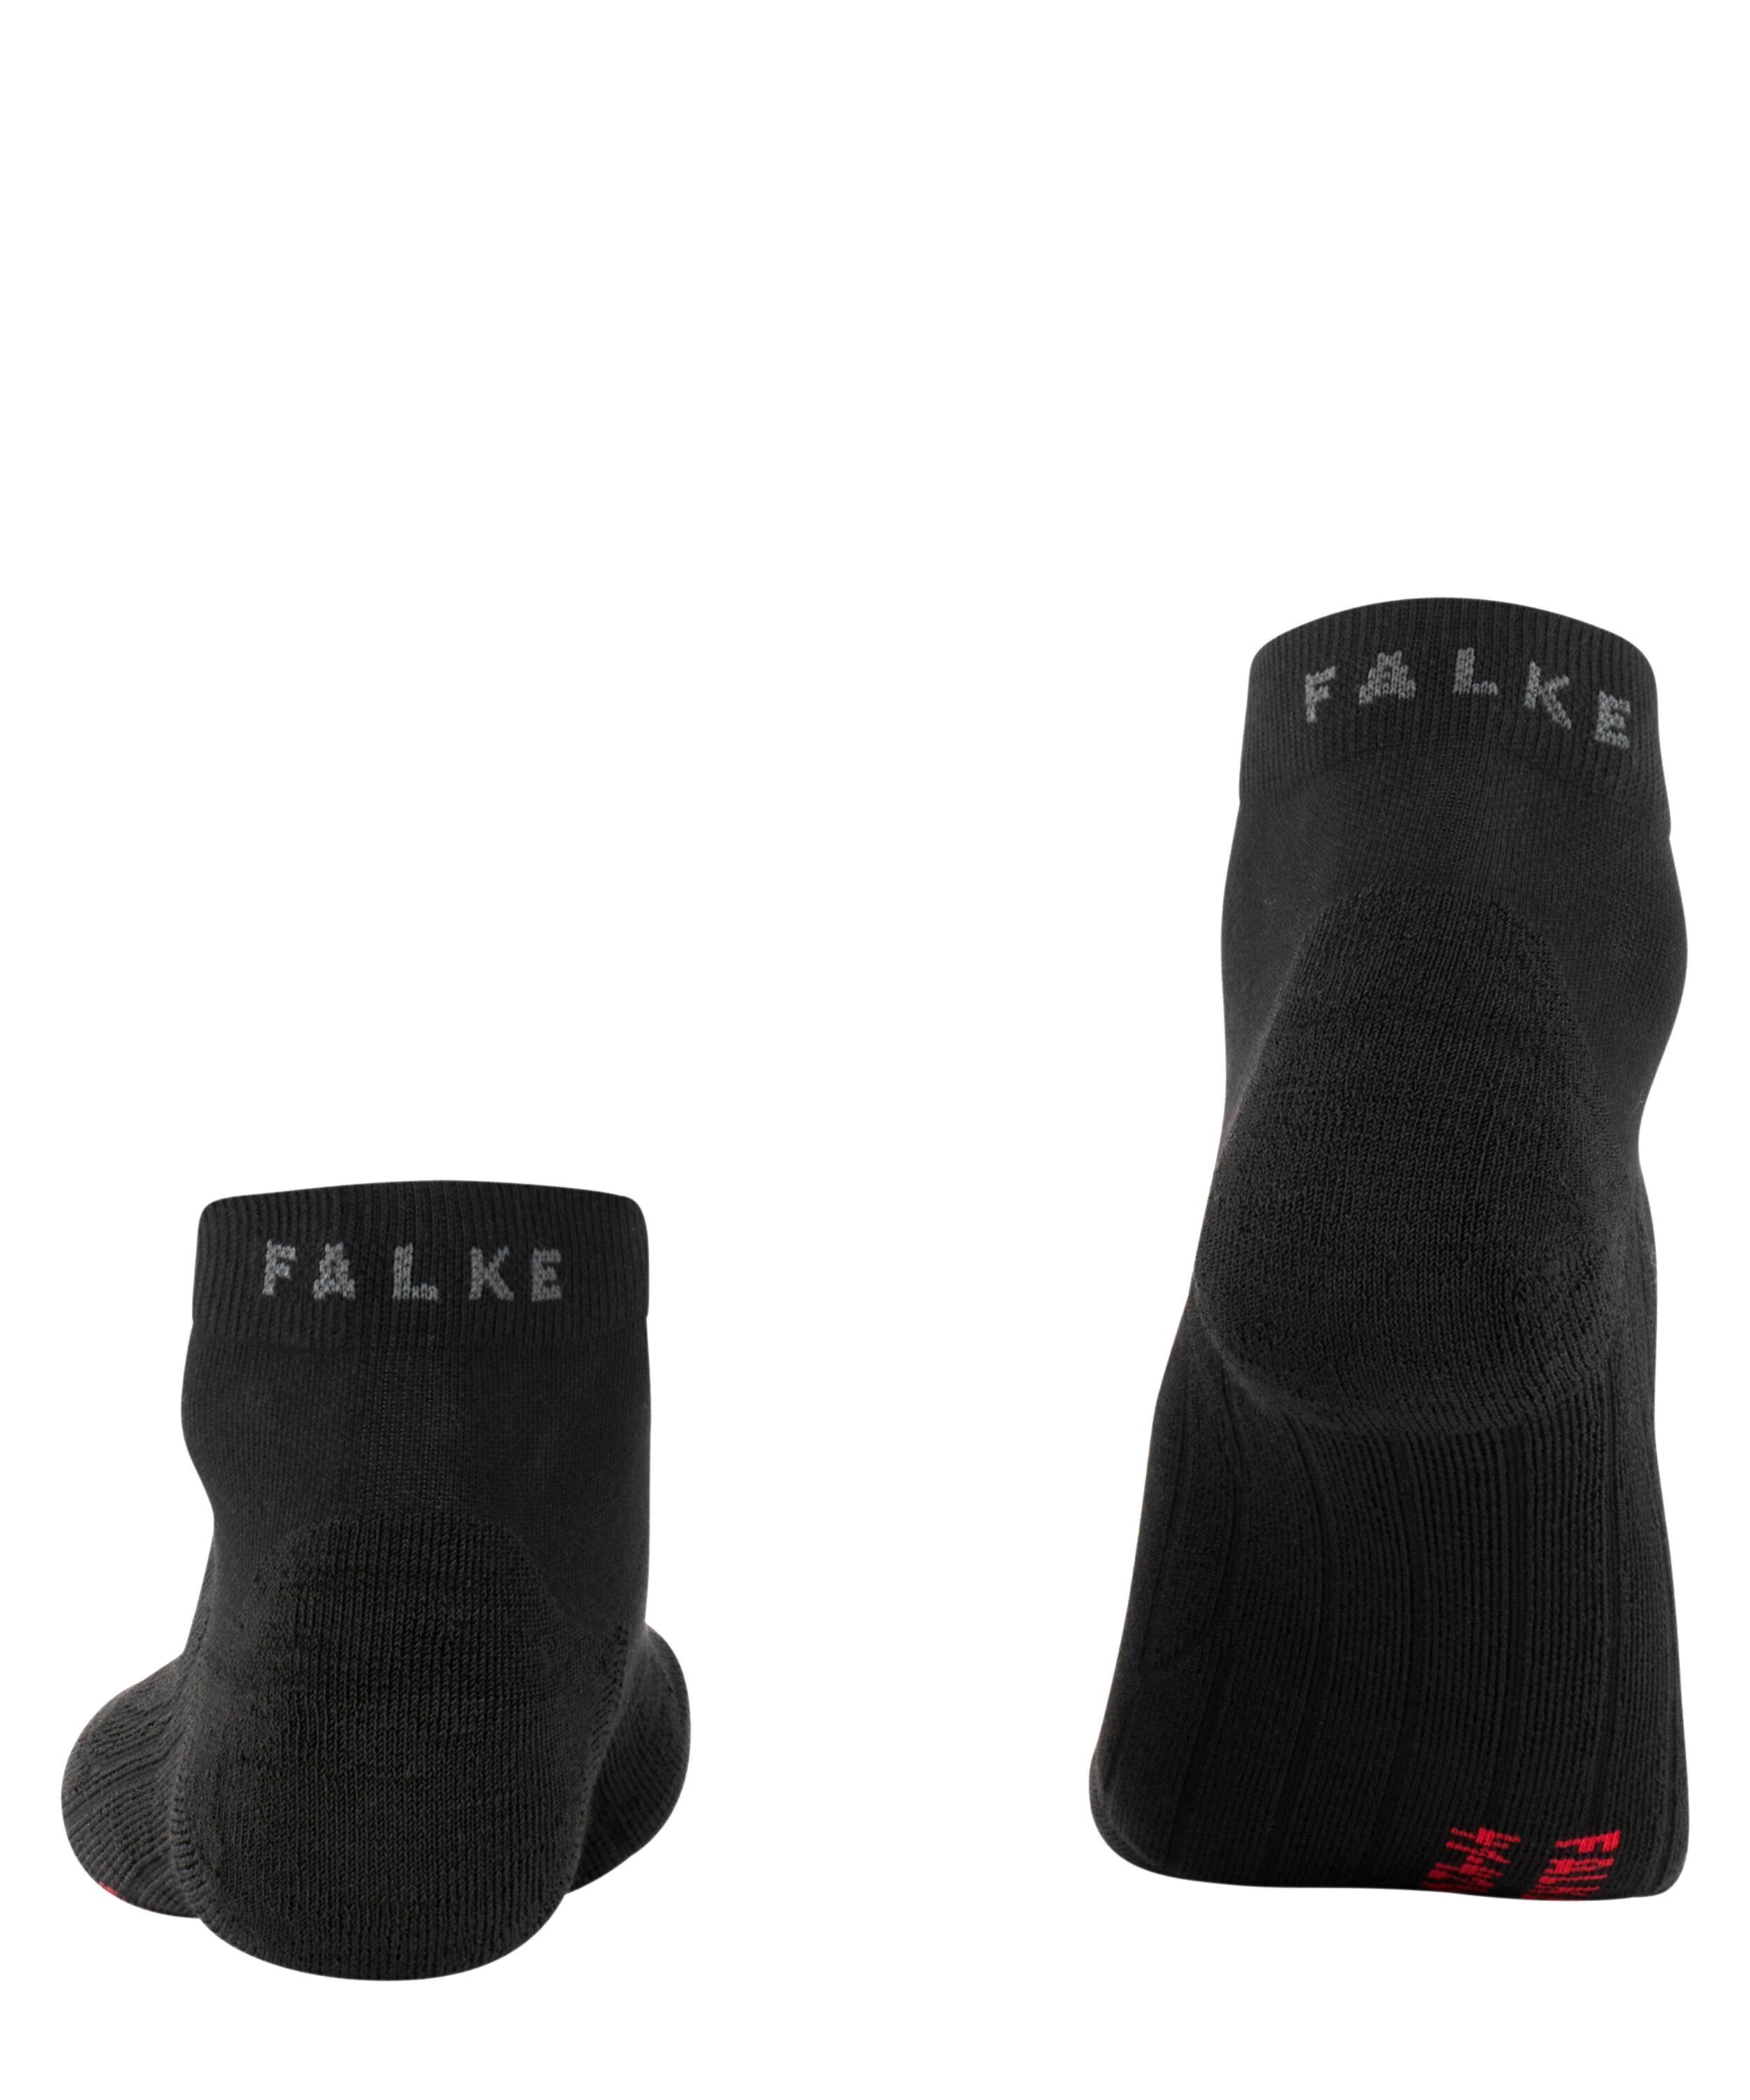 FALKE Sportsocken GO2 black (1-Paar) Spikeschuhe für (3000) Polsterung mit mittelstarker Short